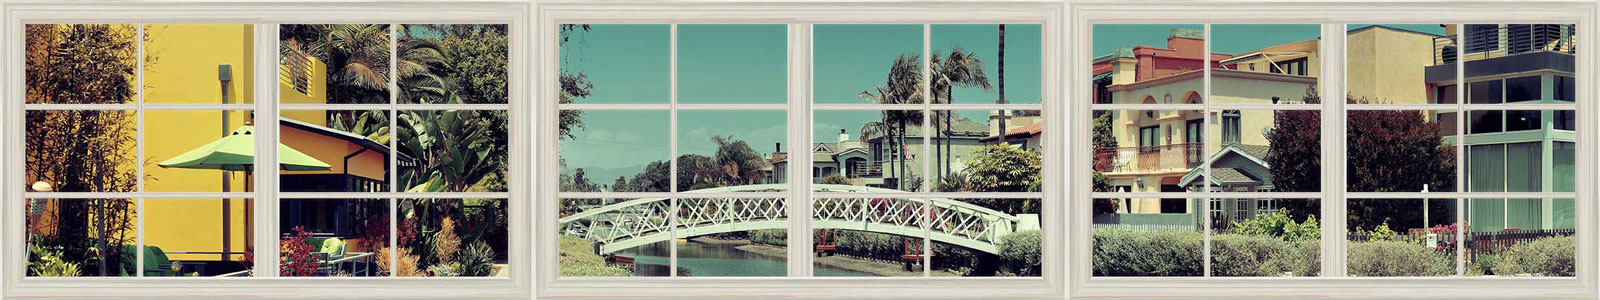 №3793 - Вид из окна на Венецианский канал в Лос-Анджелесе